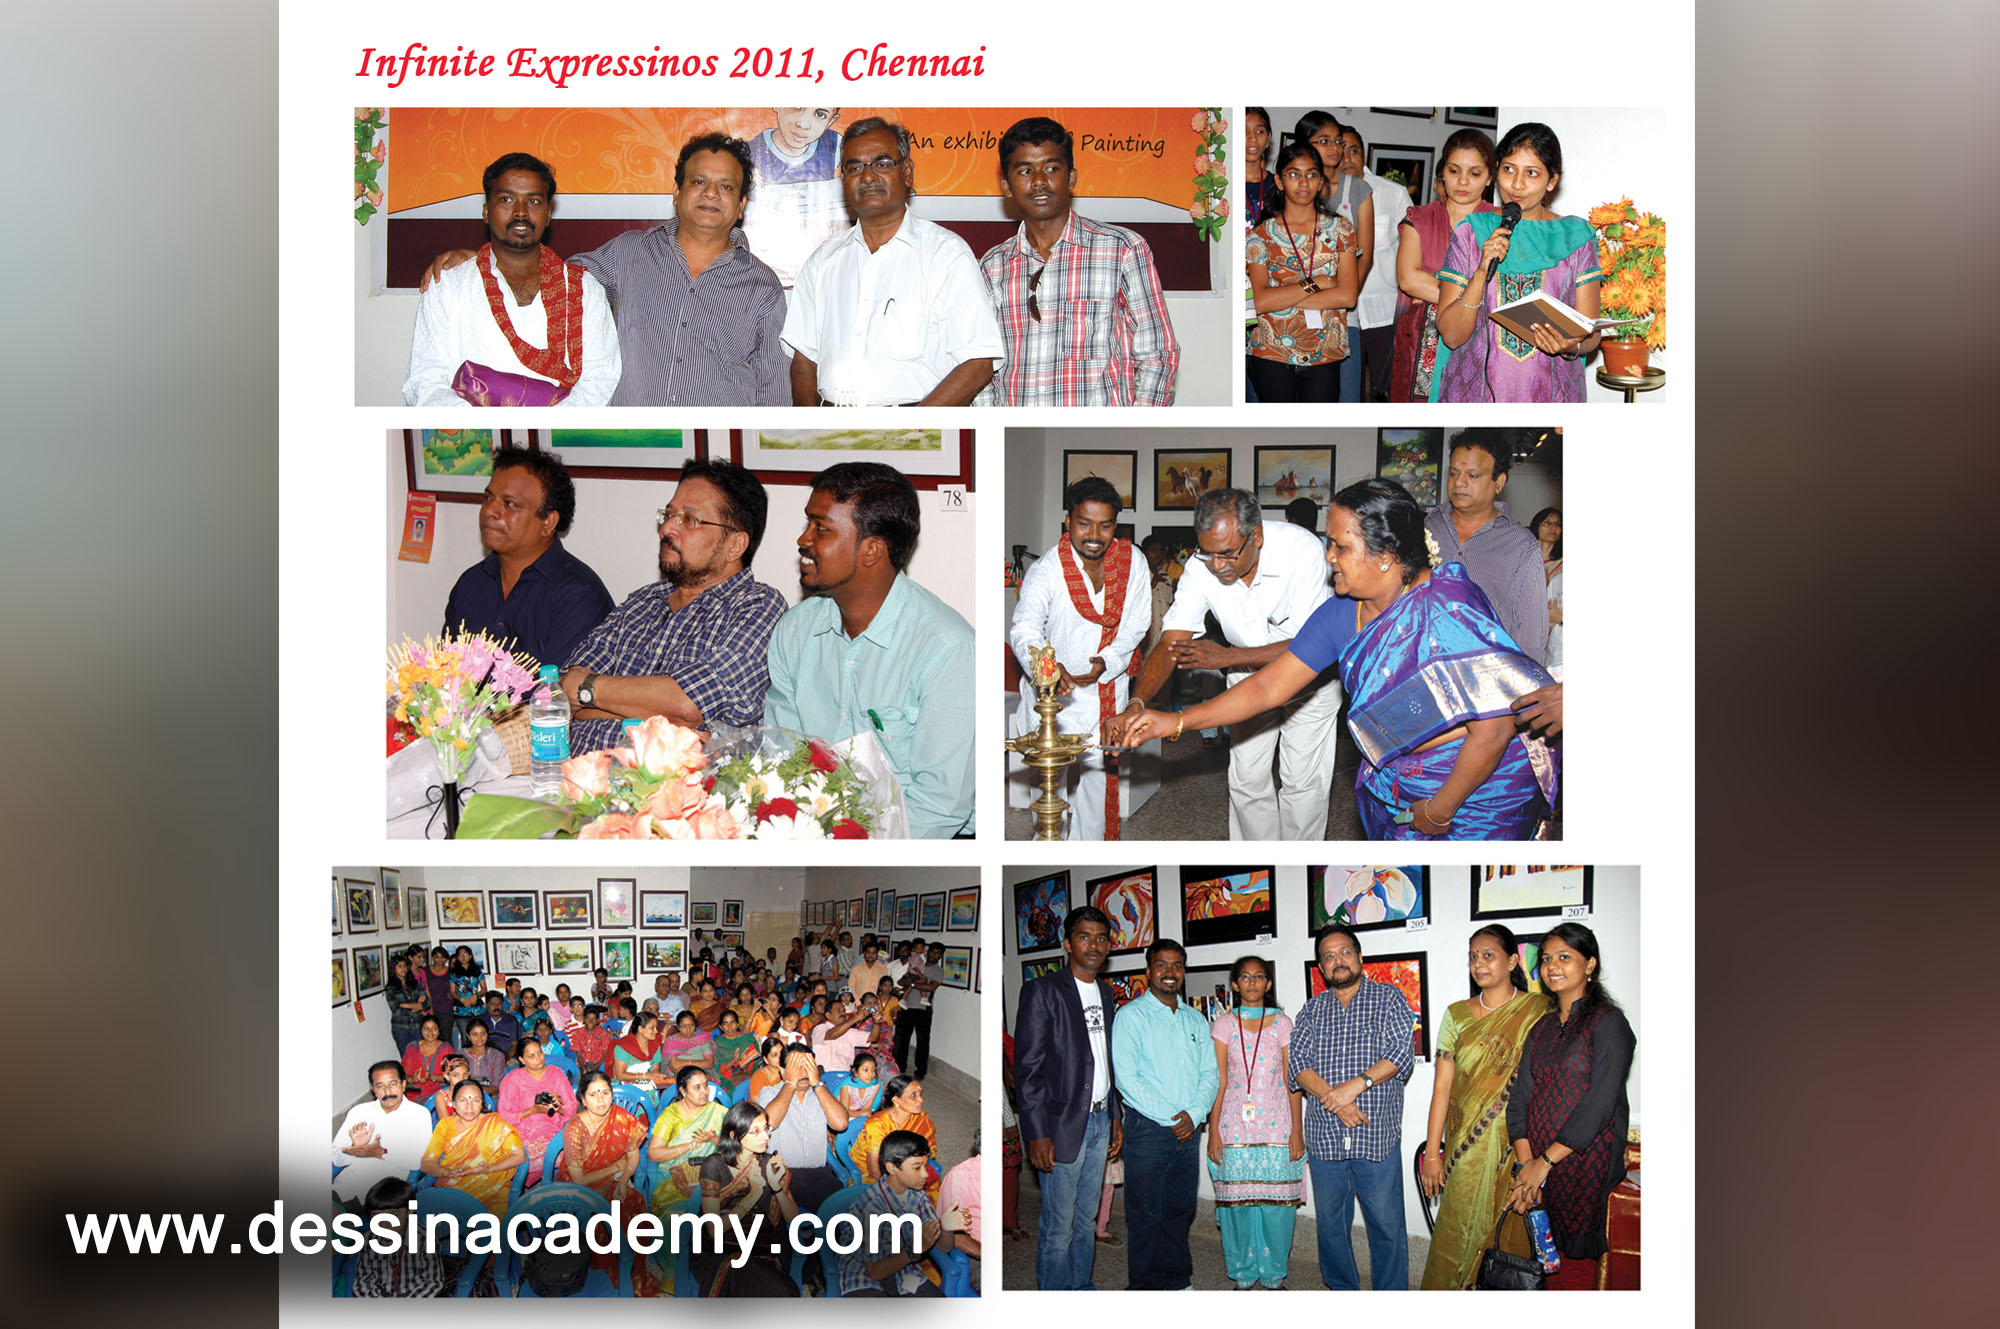 Dessin School of Arts Event Gallery 5, Drawing classes for Kids in Pallikaranai Kamakoti NagarDessin School of Arts